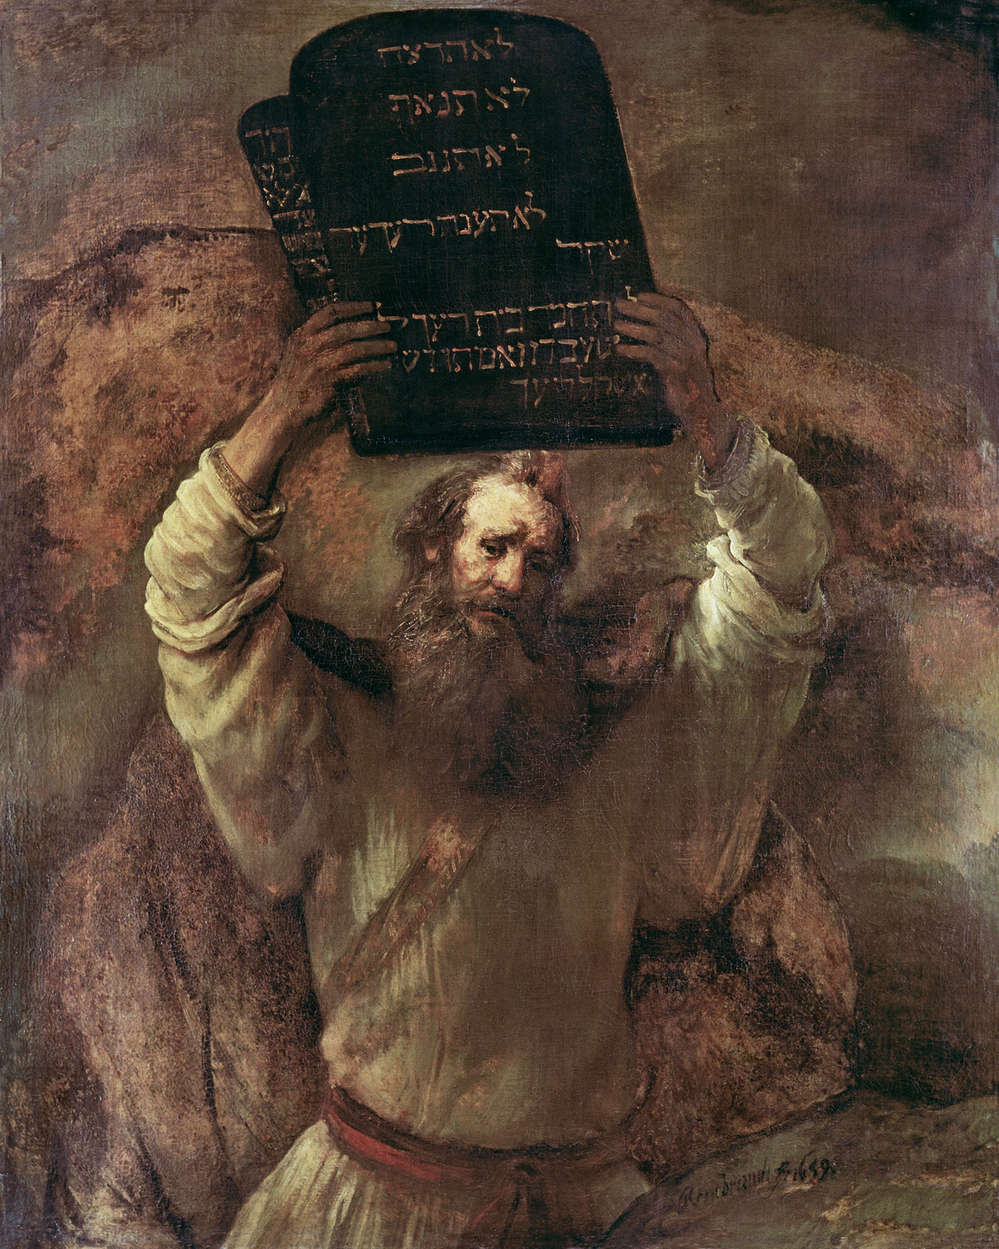             Fototapete "Moses zerschmettert die Gesetzestafeln" von Rembrandt van Rijn
        